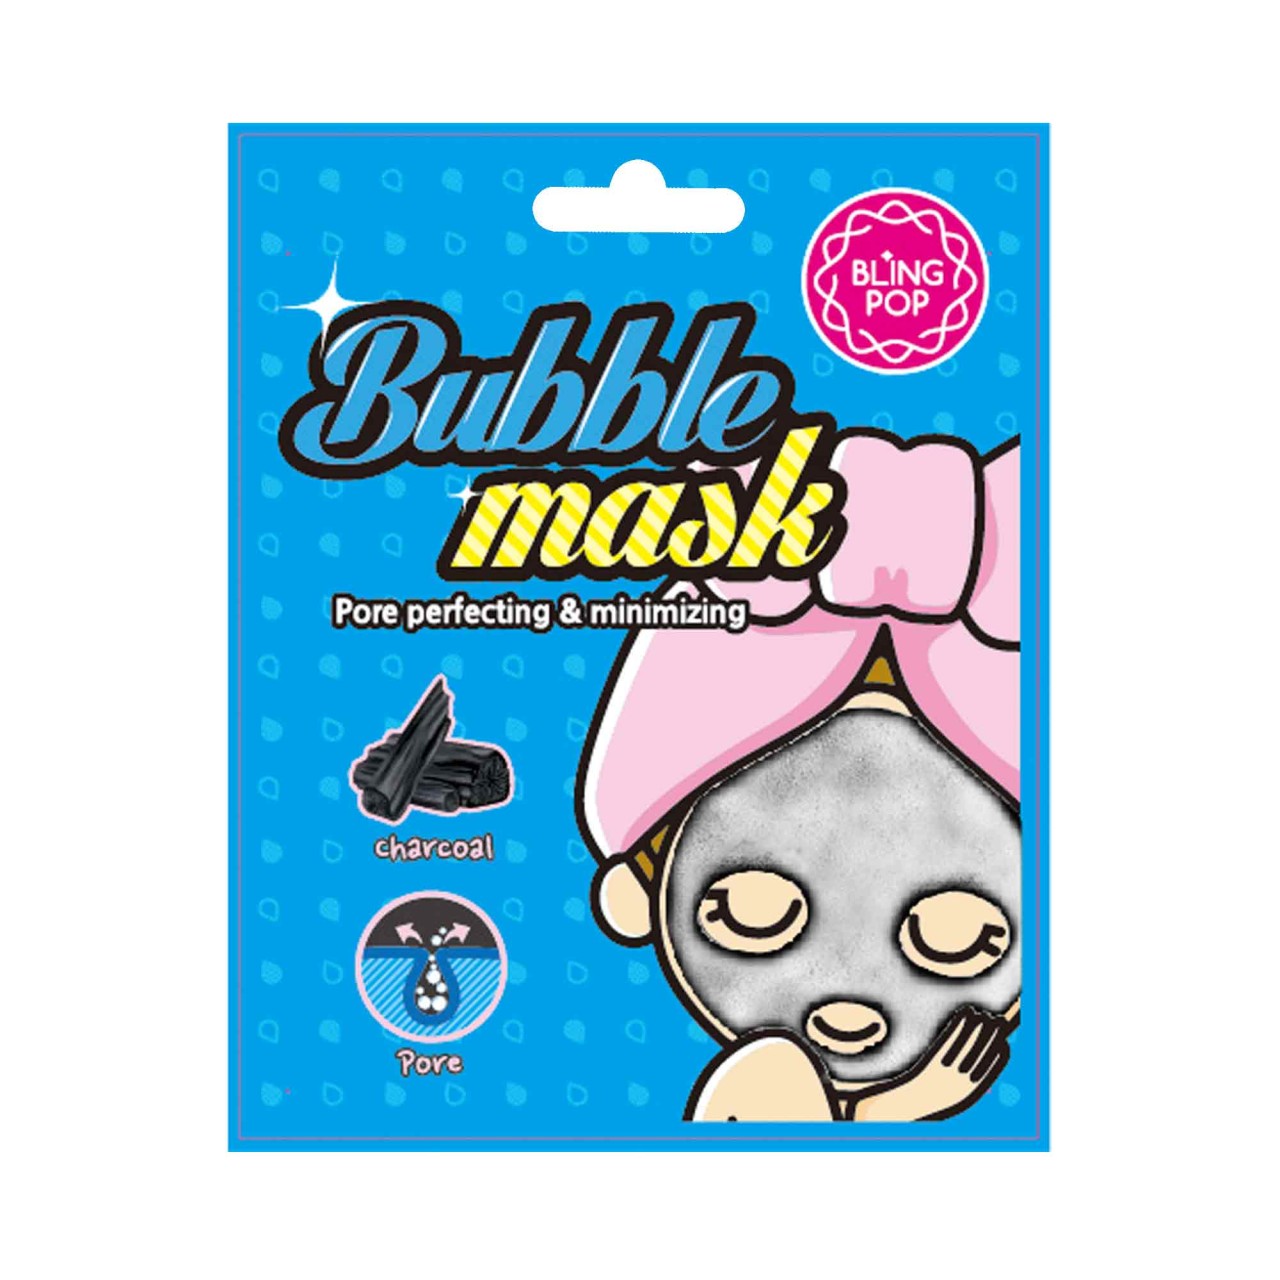 Bling Pop - Bubble Charcoal Face Mask - 